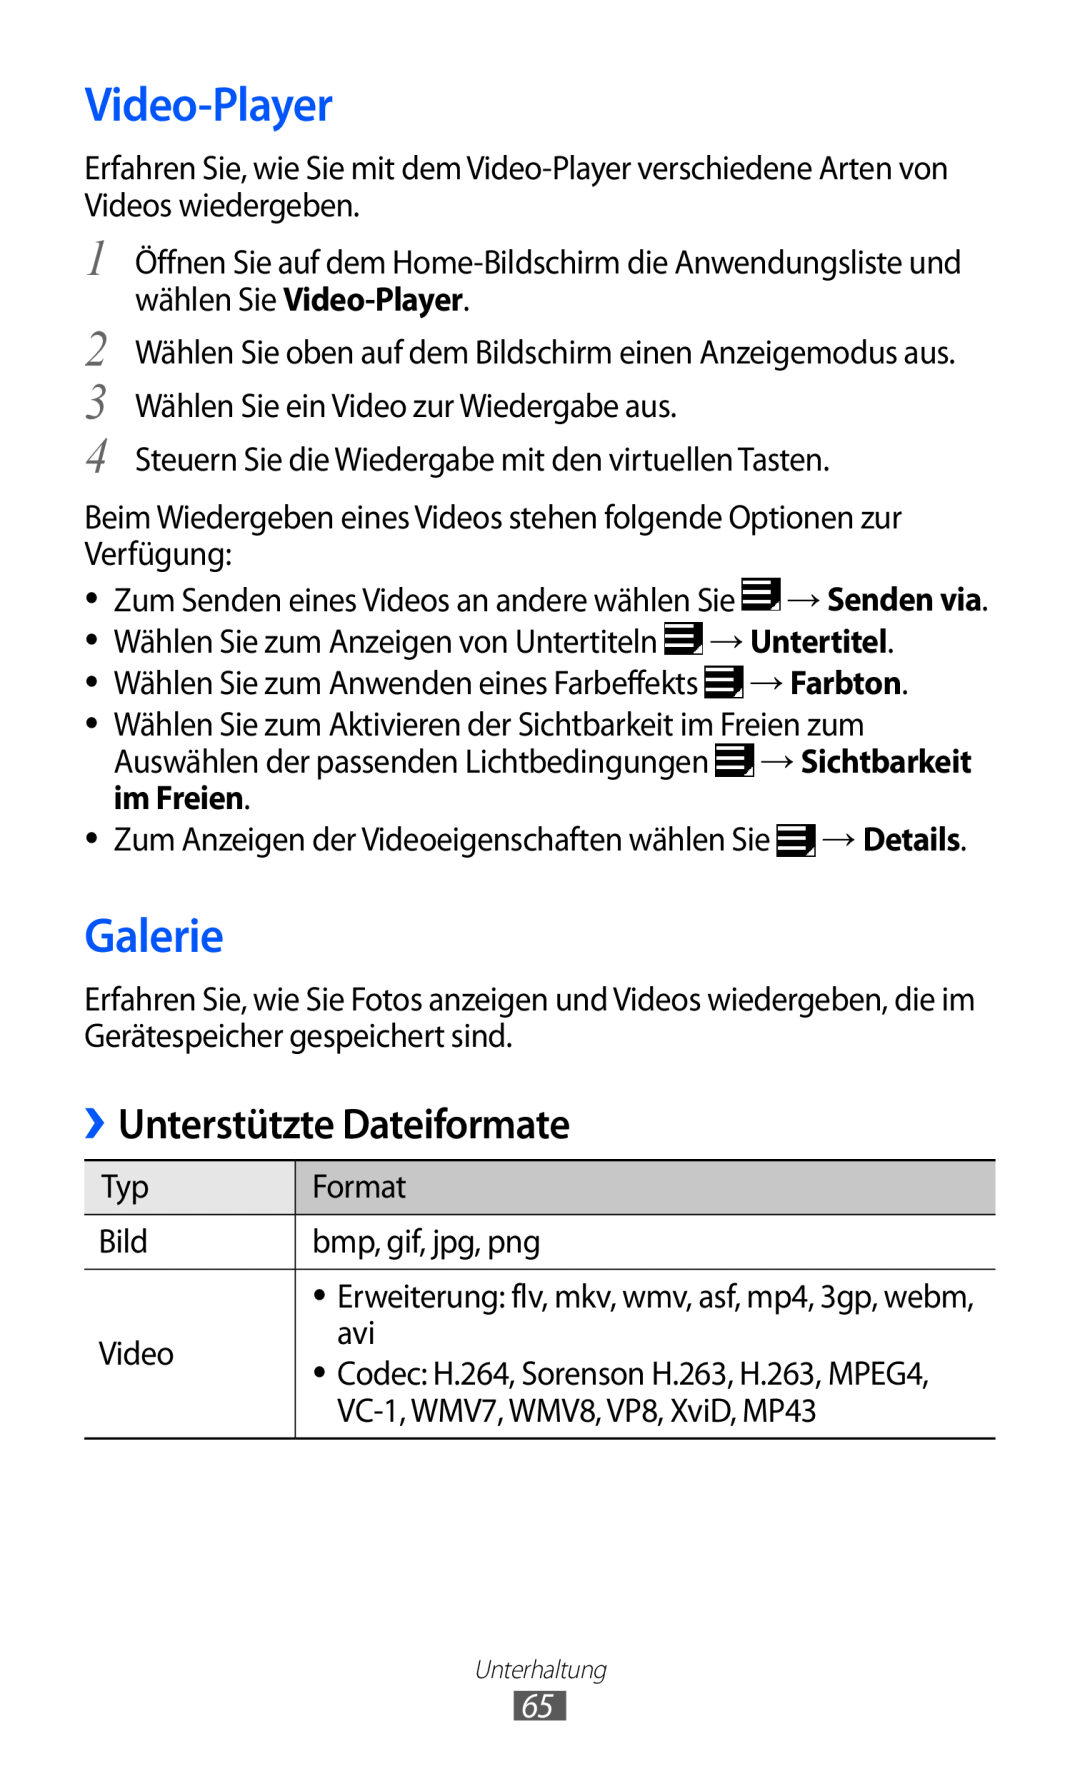 Samsung GT-P7501FKDDBT, GT-P7501UWEDBT, GT-P7501UWDVIA, GT-P7501FKDDTM manual Video-Player, Galerie, Unterstützte Dateiformate 